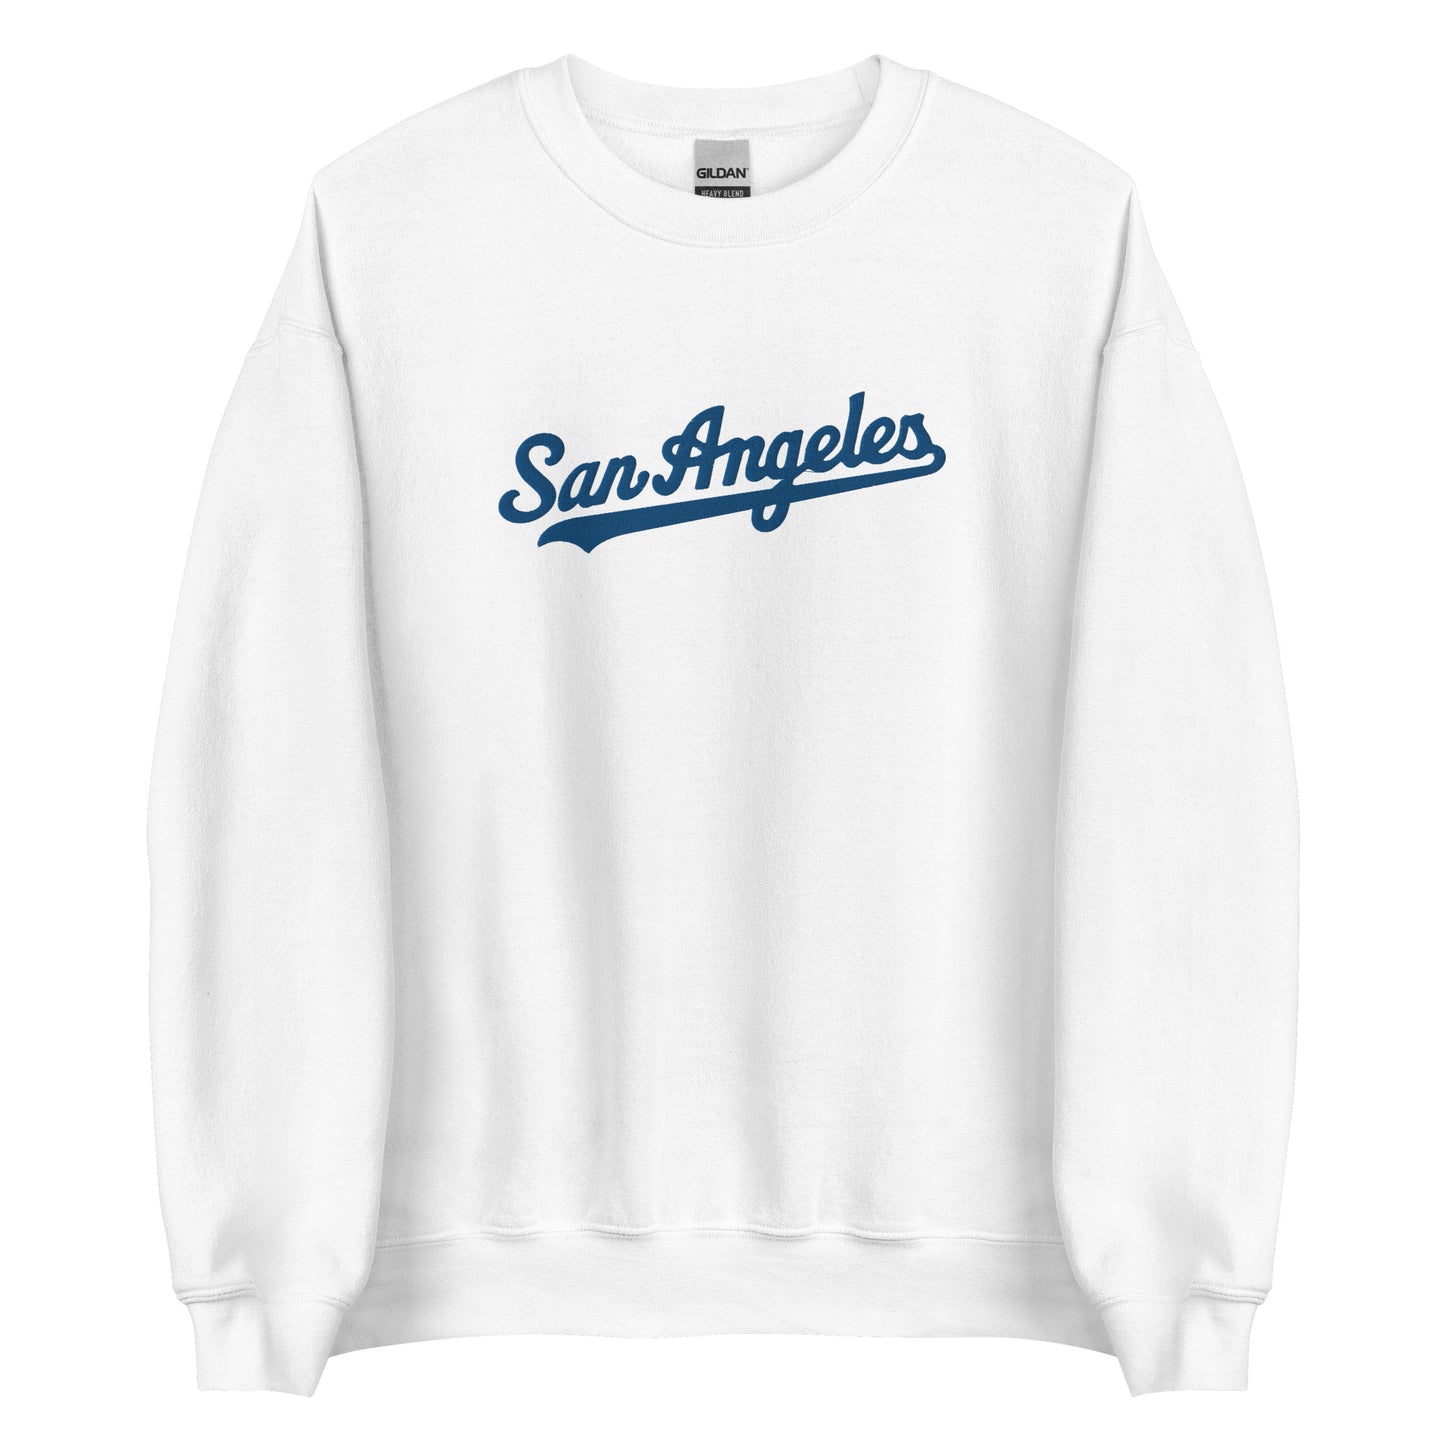 San Angeles embroidered sweatshirt